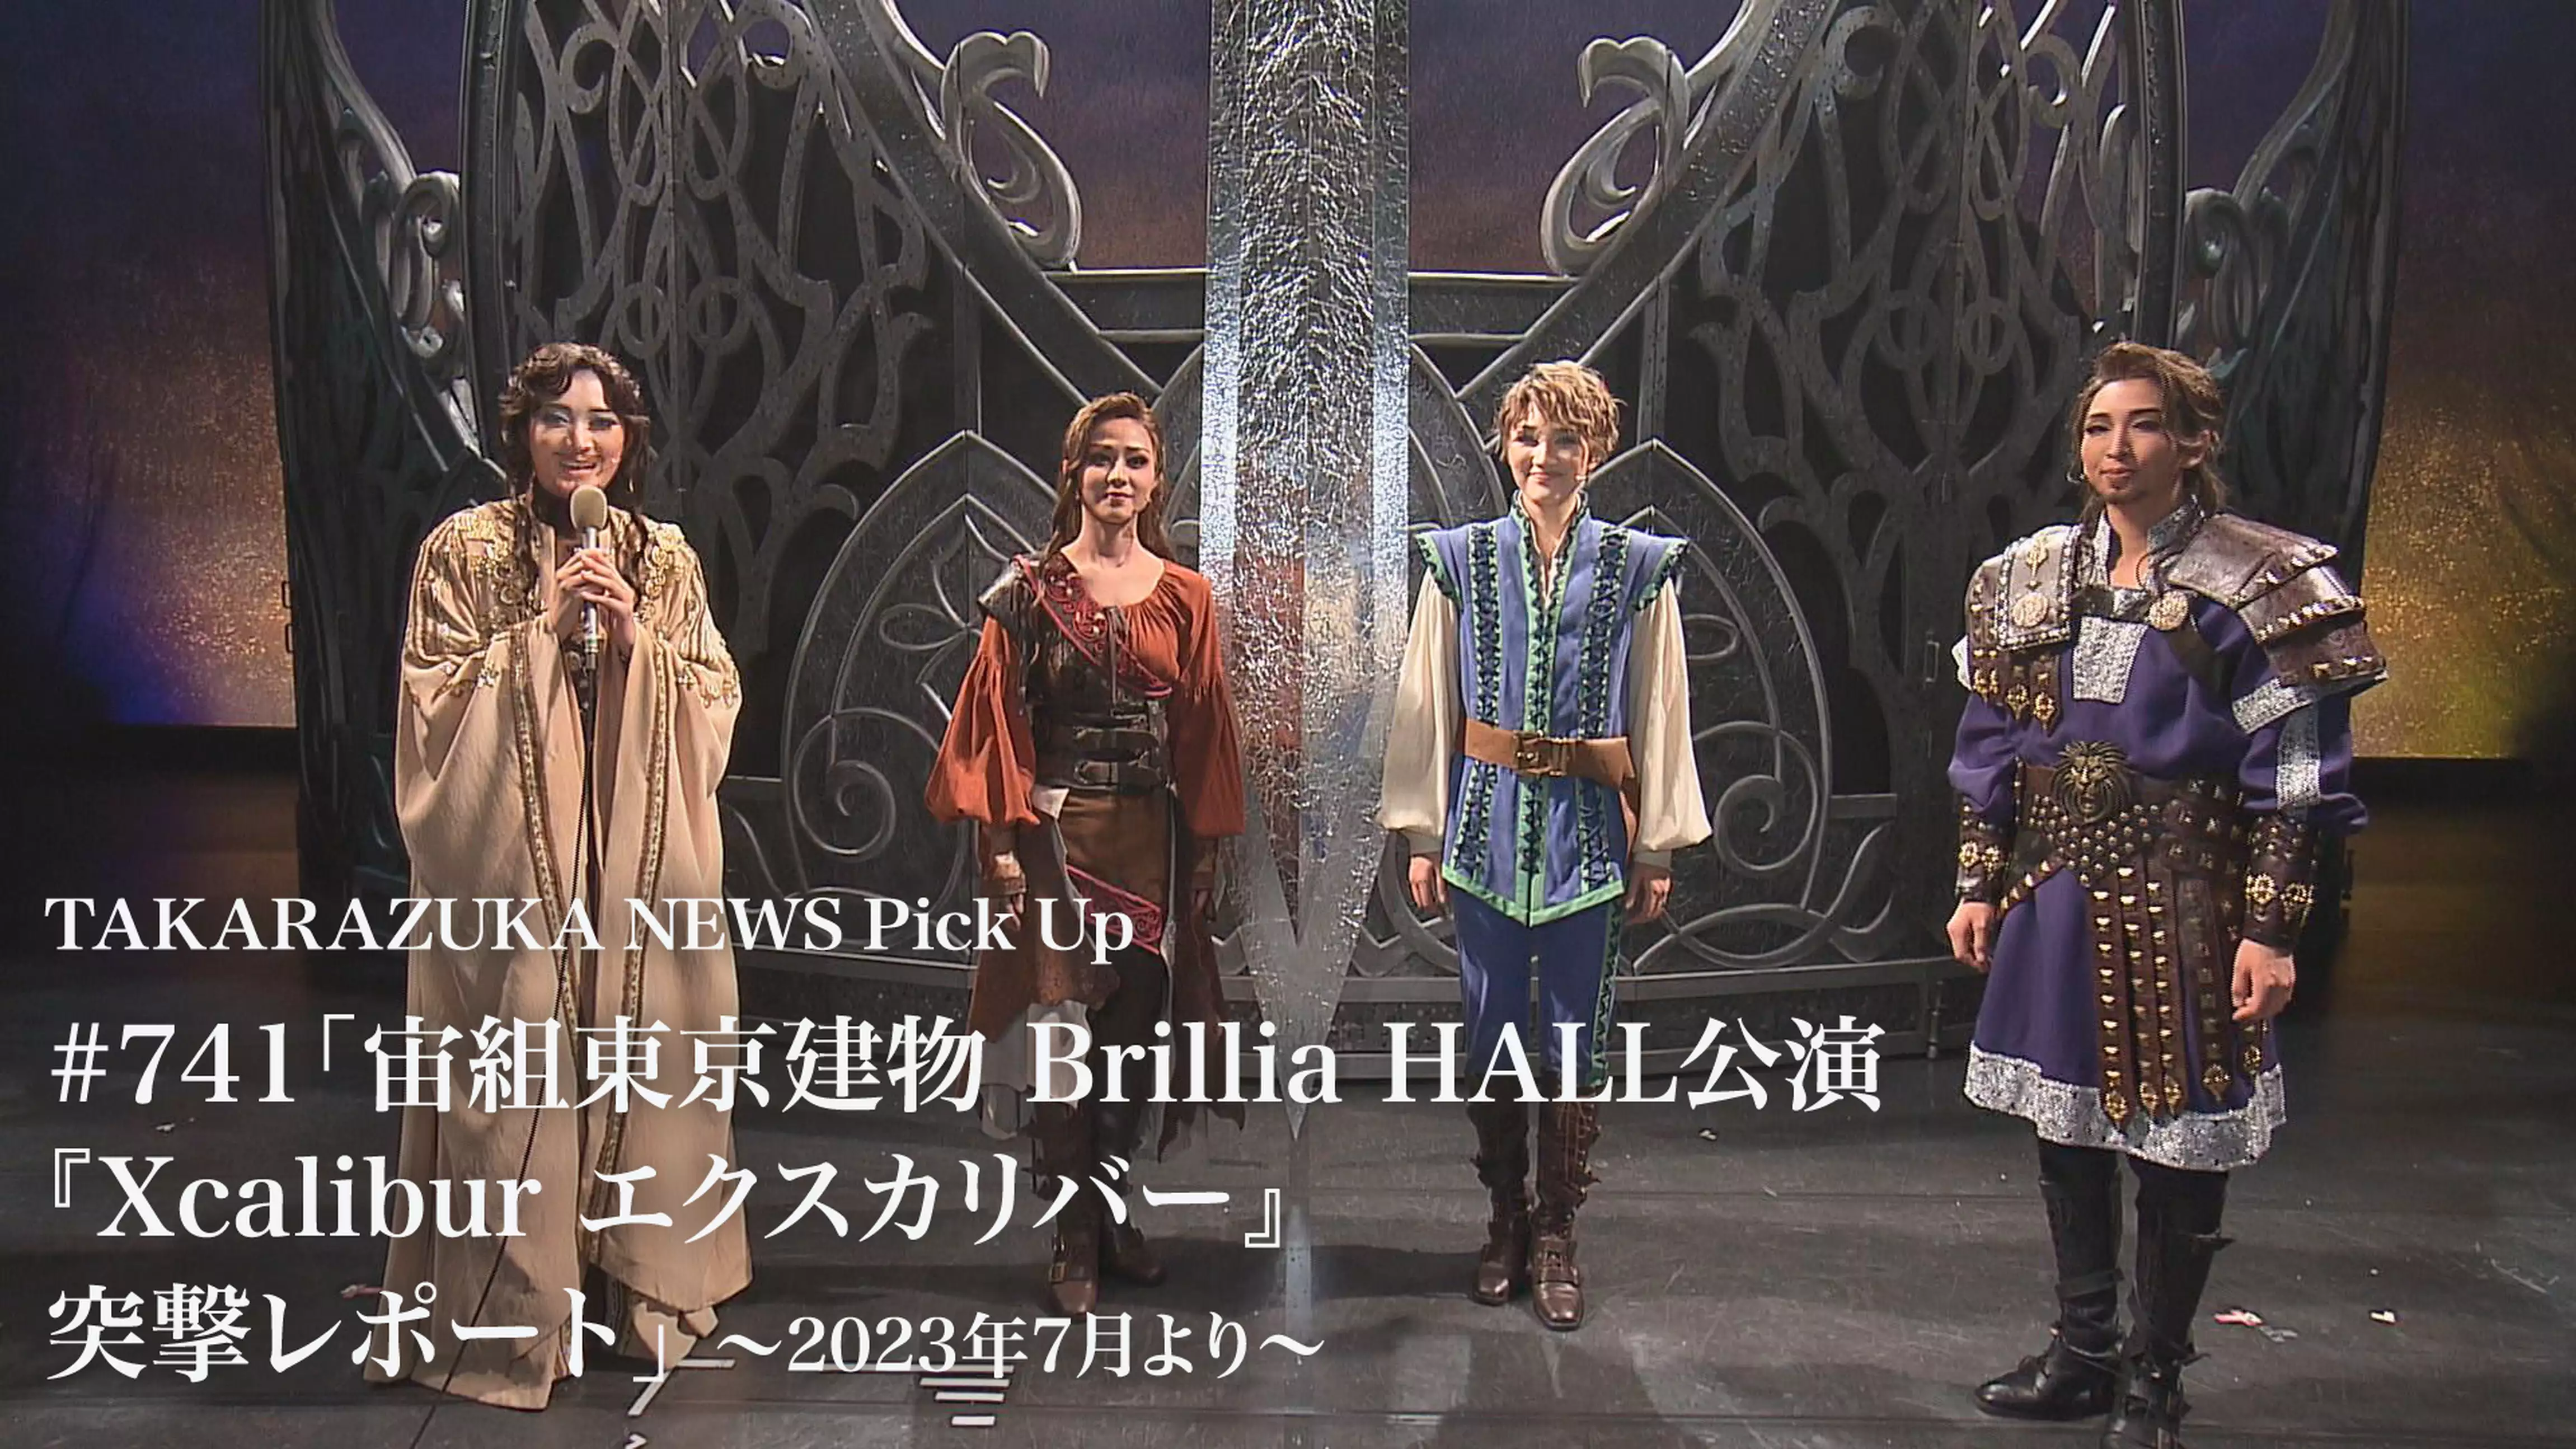 TAKARAZUKA NEWS Pick Up #741「宙組東京建物 Brillia HALL公演 